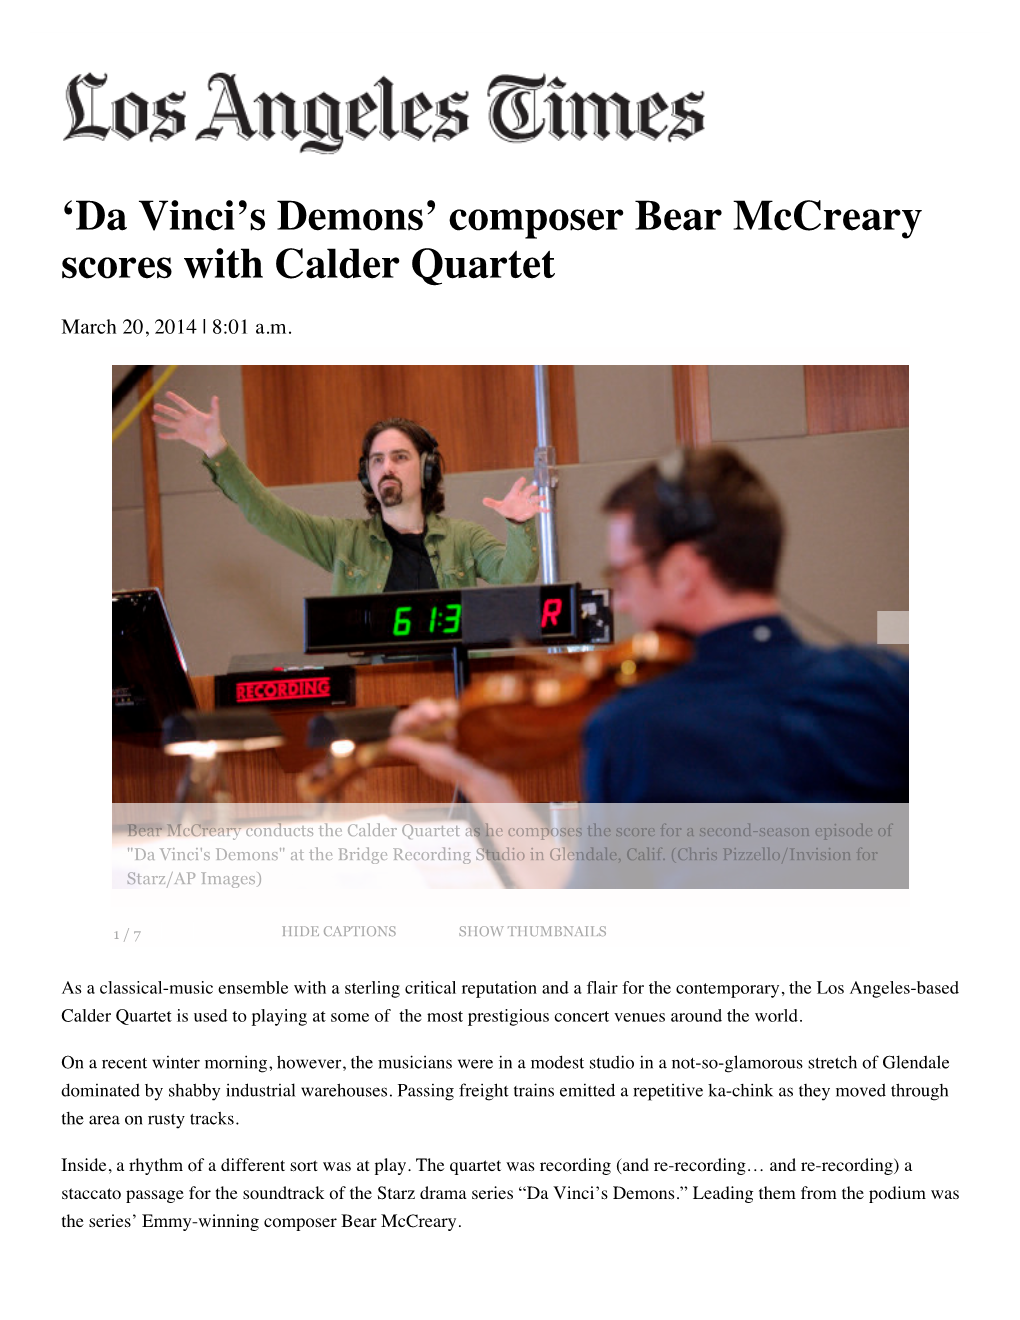 Composer Bear Mccreary Scores with Calder Quartet